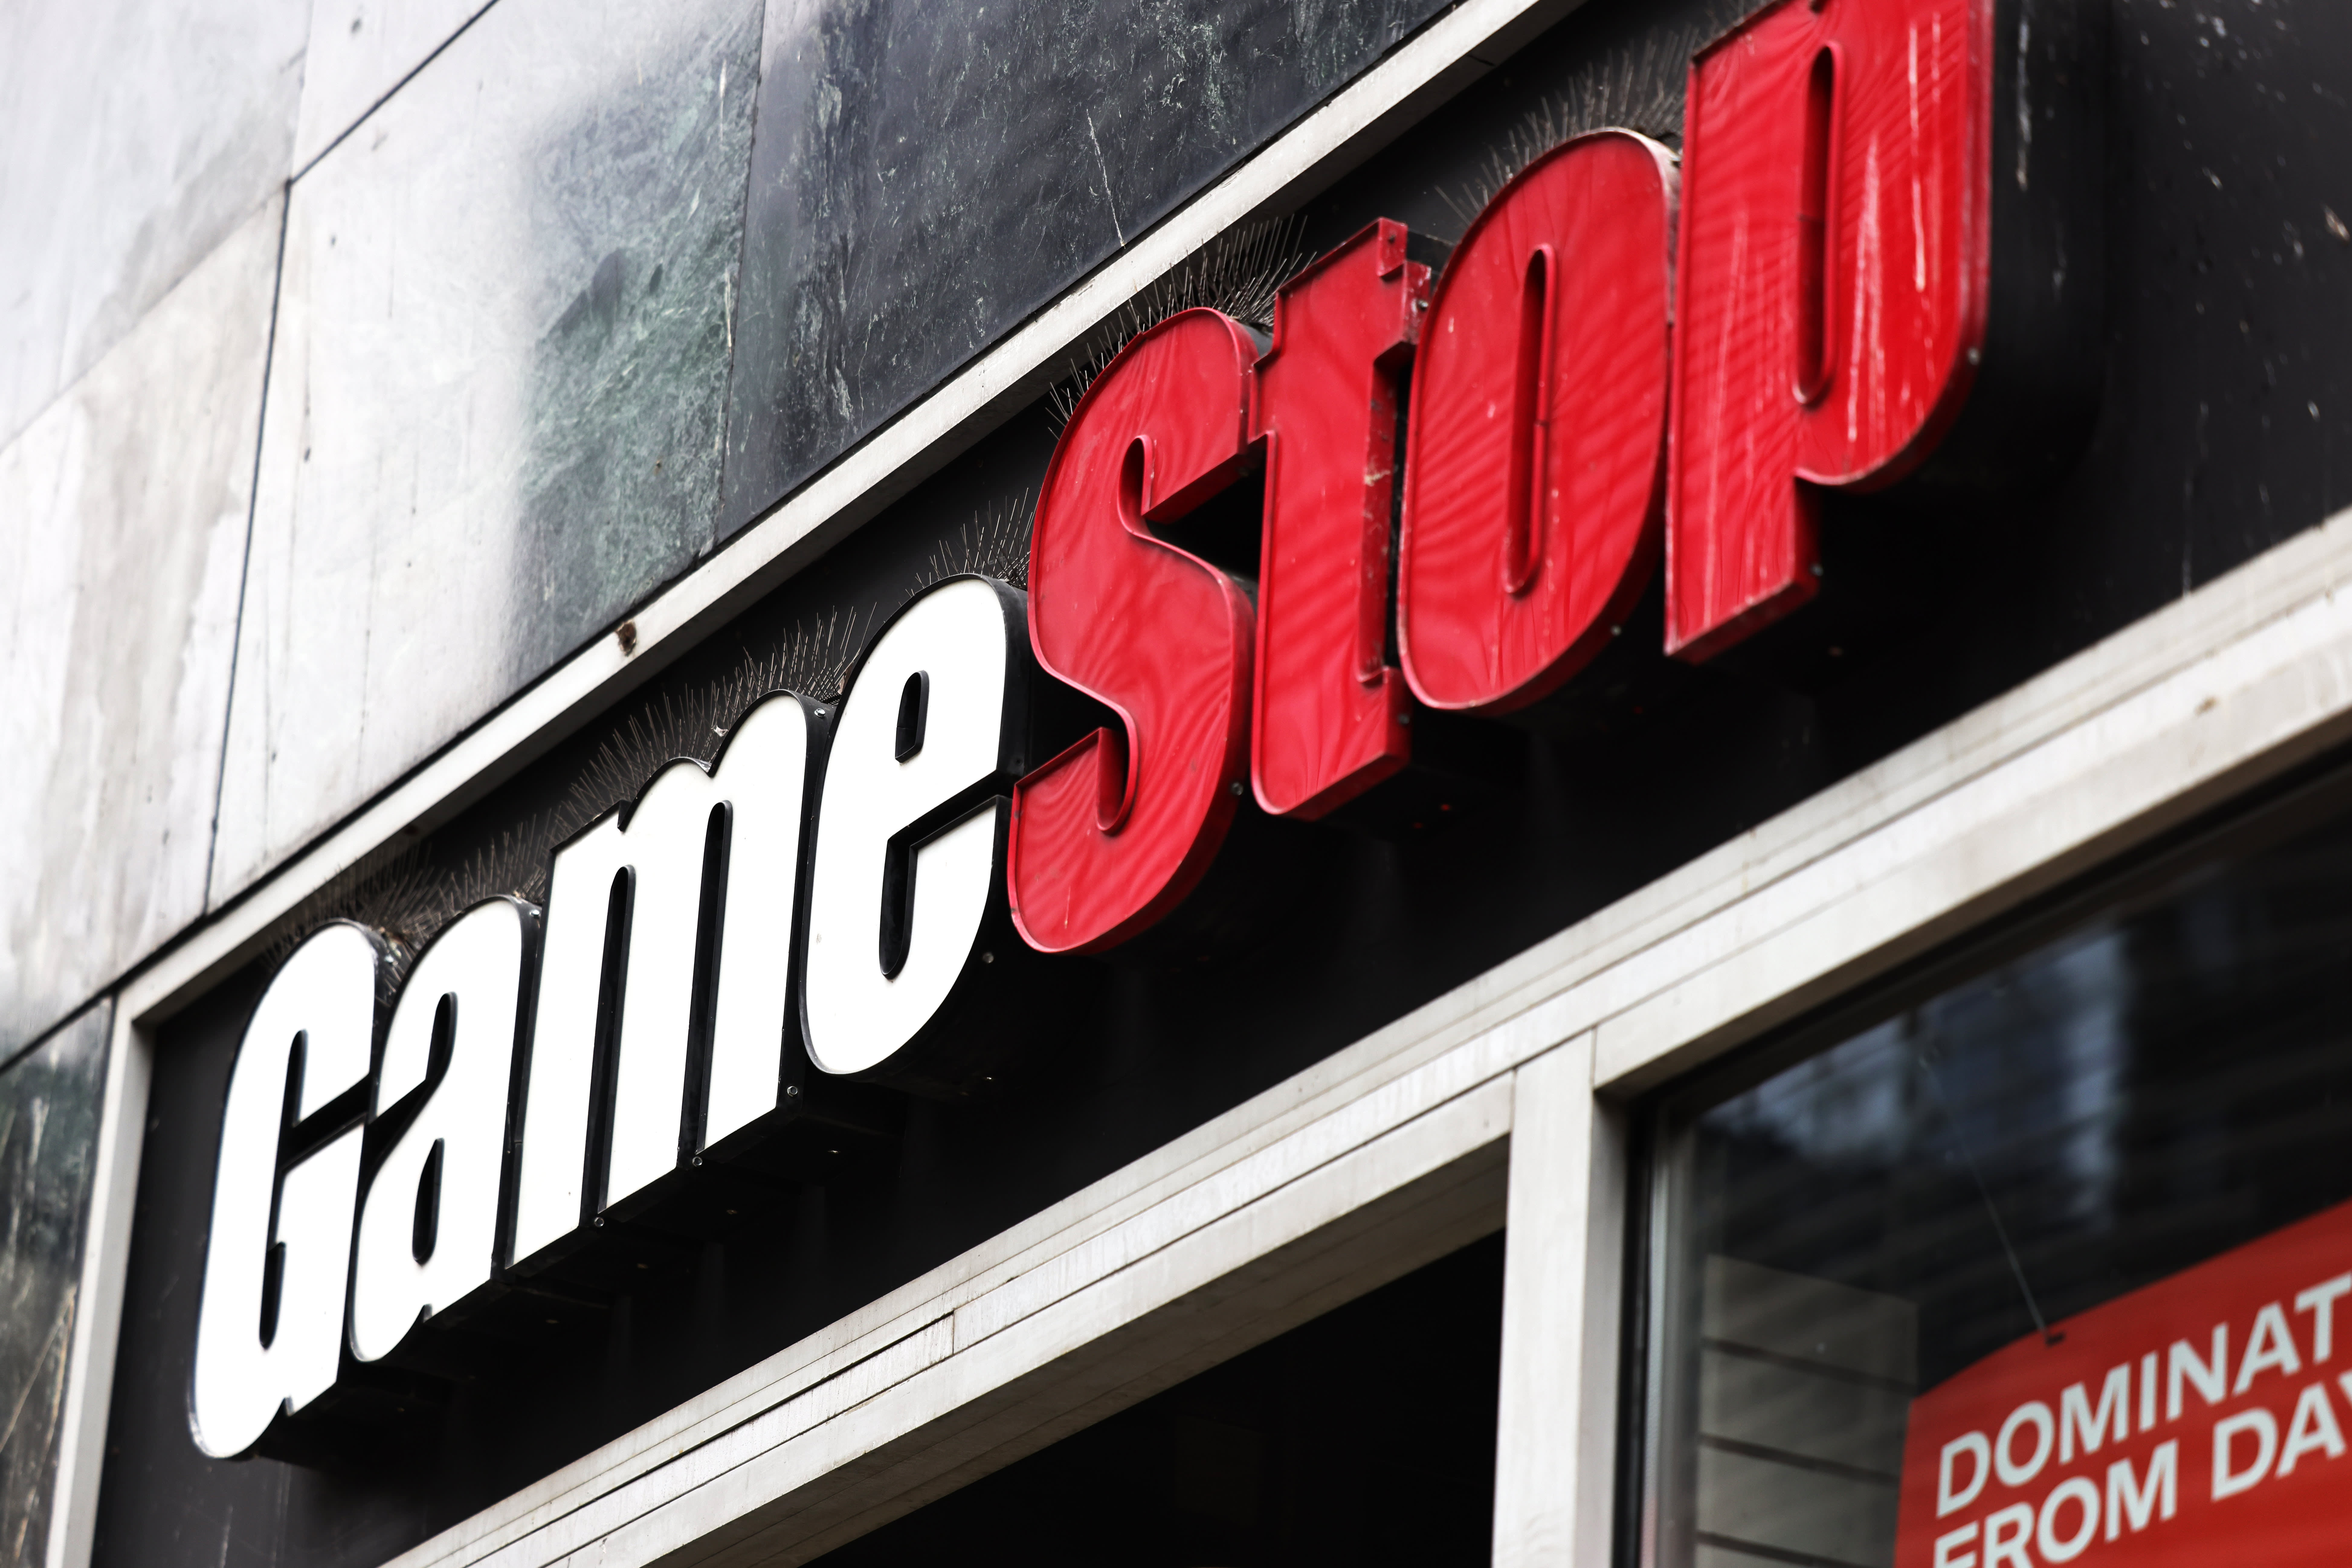 Price gamestop share GME Stock